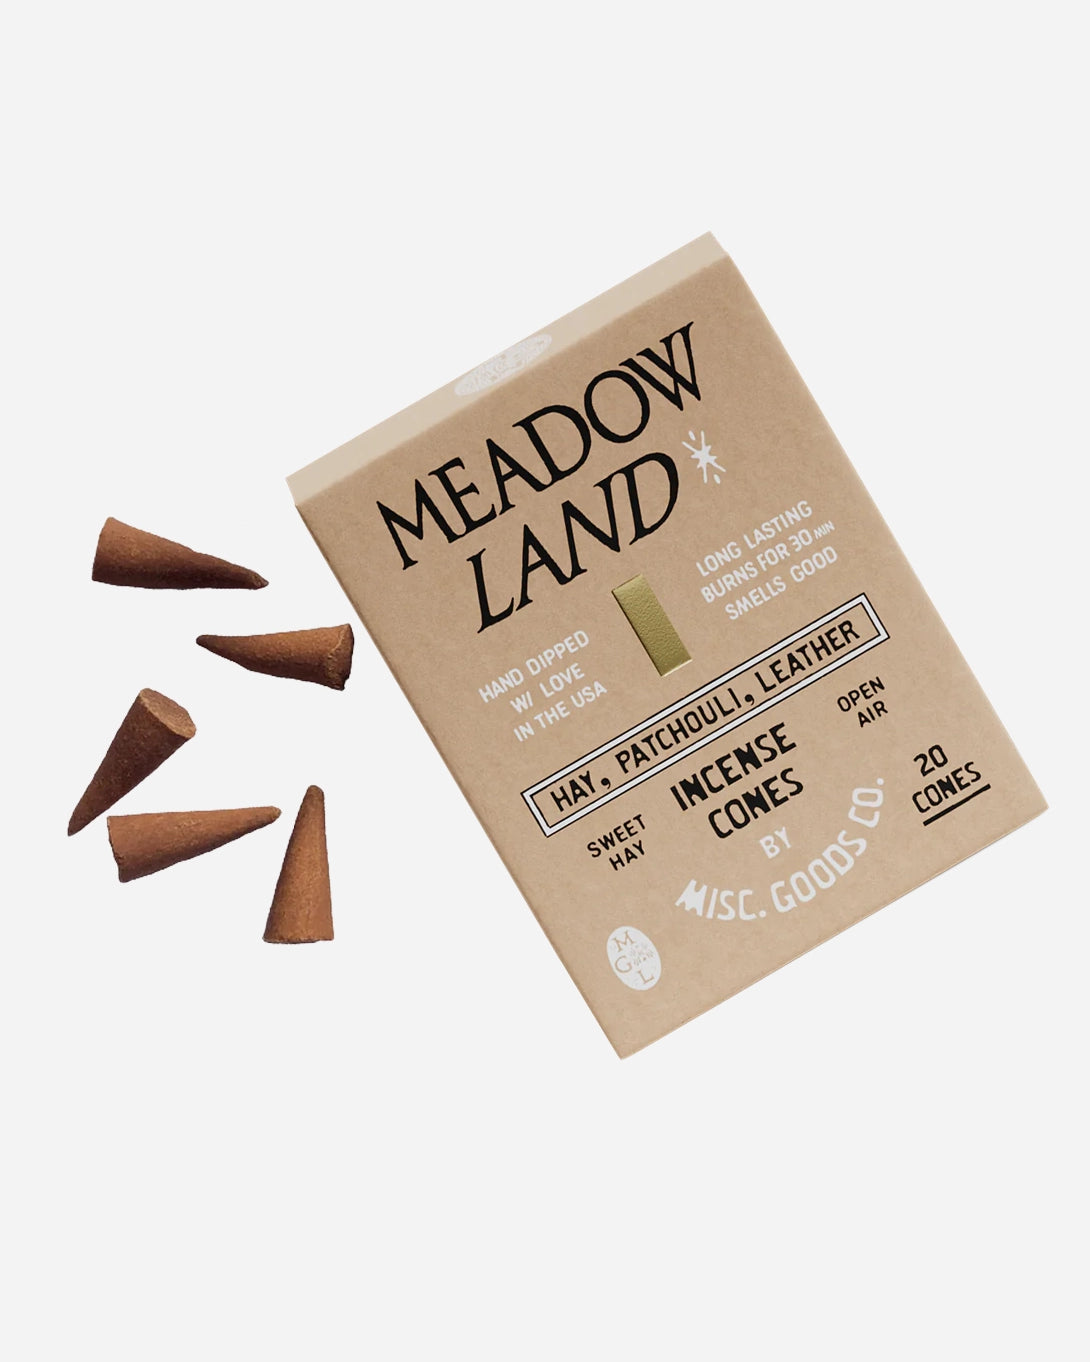 Meadowland Misc. Goods Incense Cones